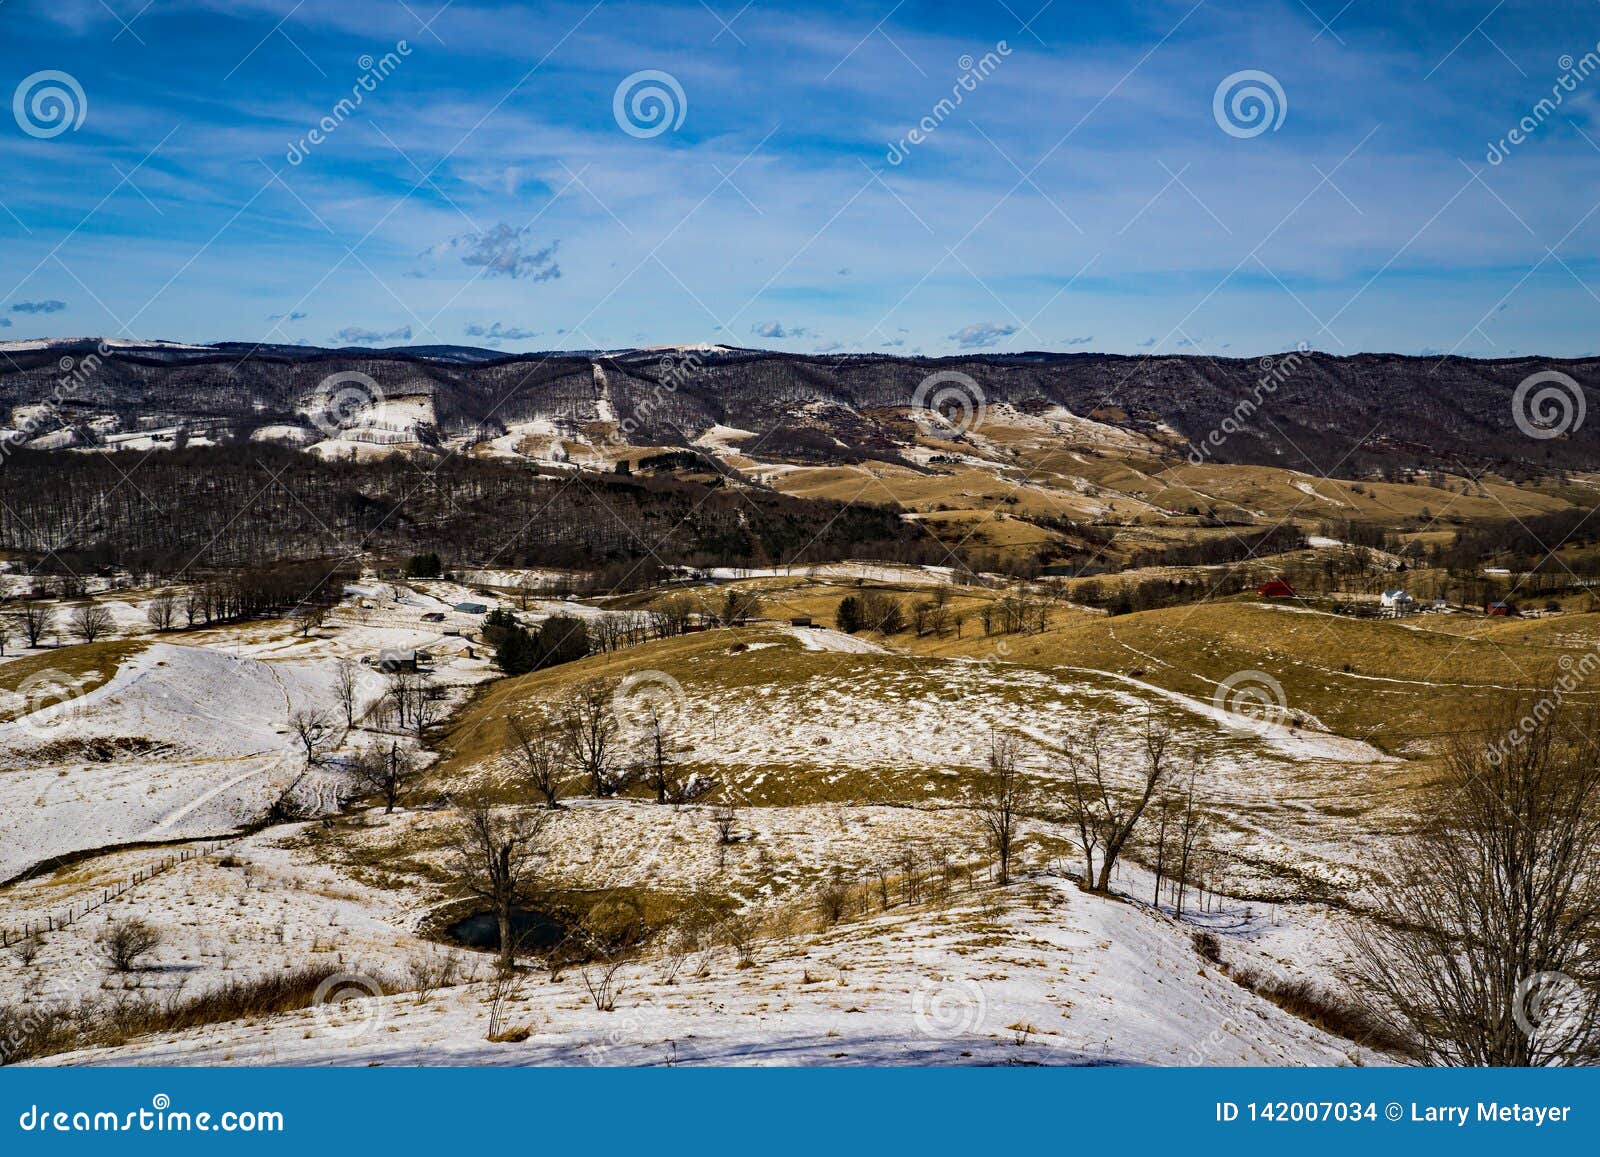 beautiful winter view of bluegrass valley